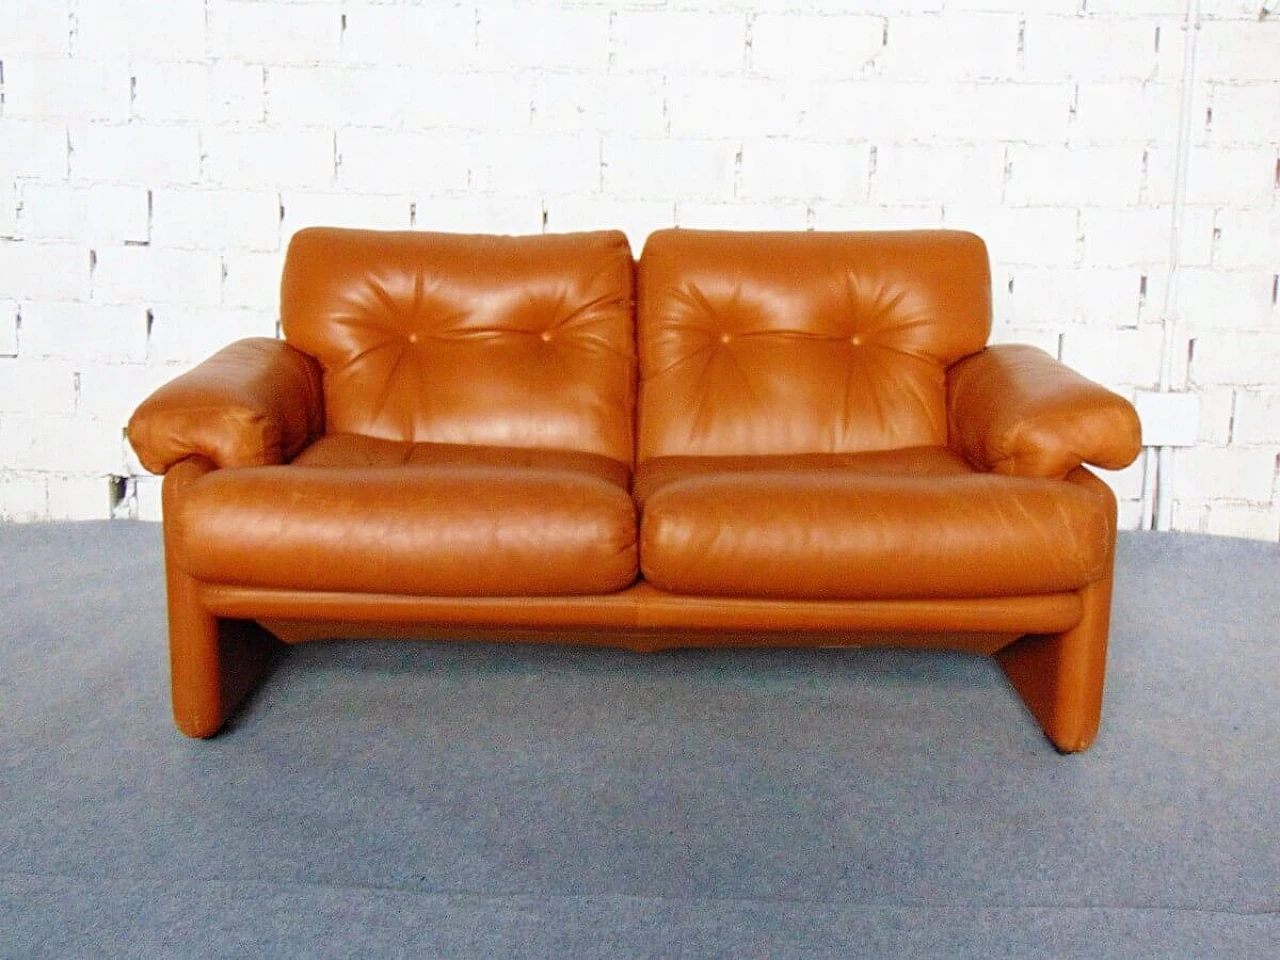 Coronado leather sofa by Tobia Scarpa for B&B Italia, 1970s 1467085